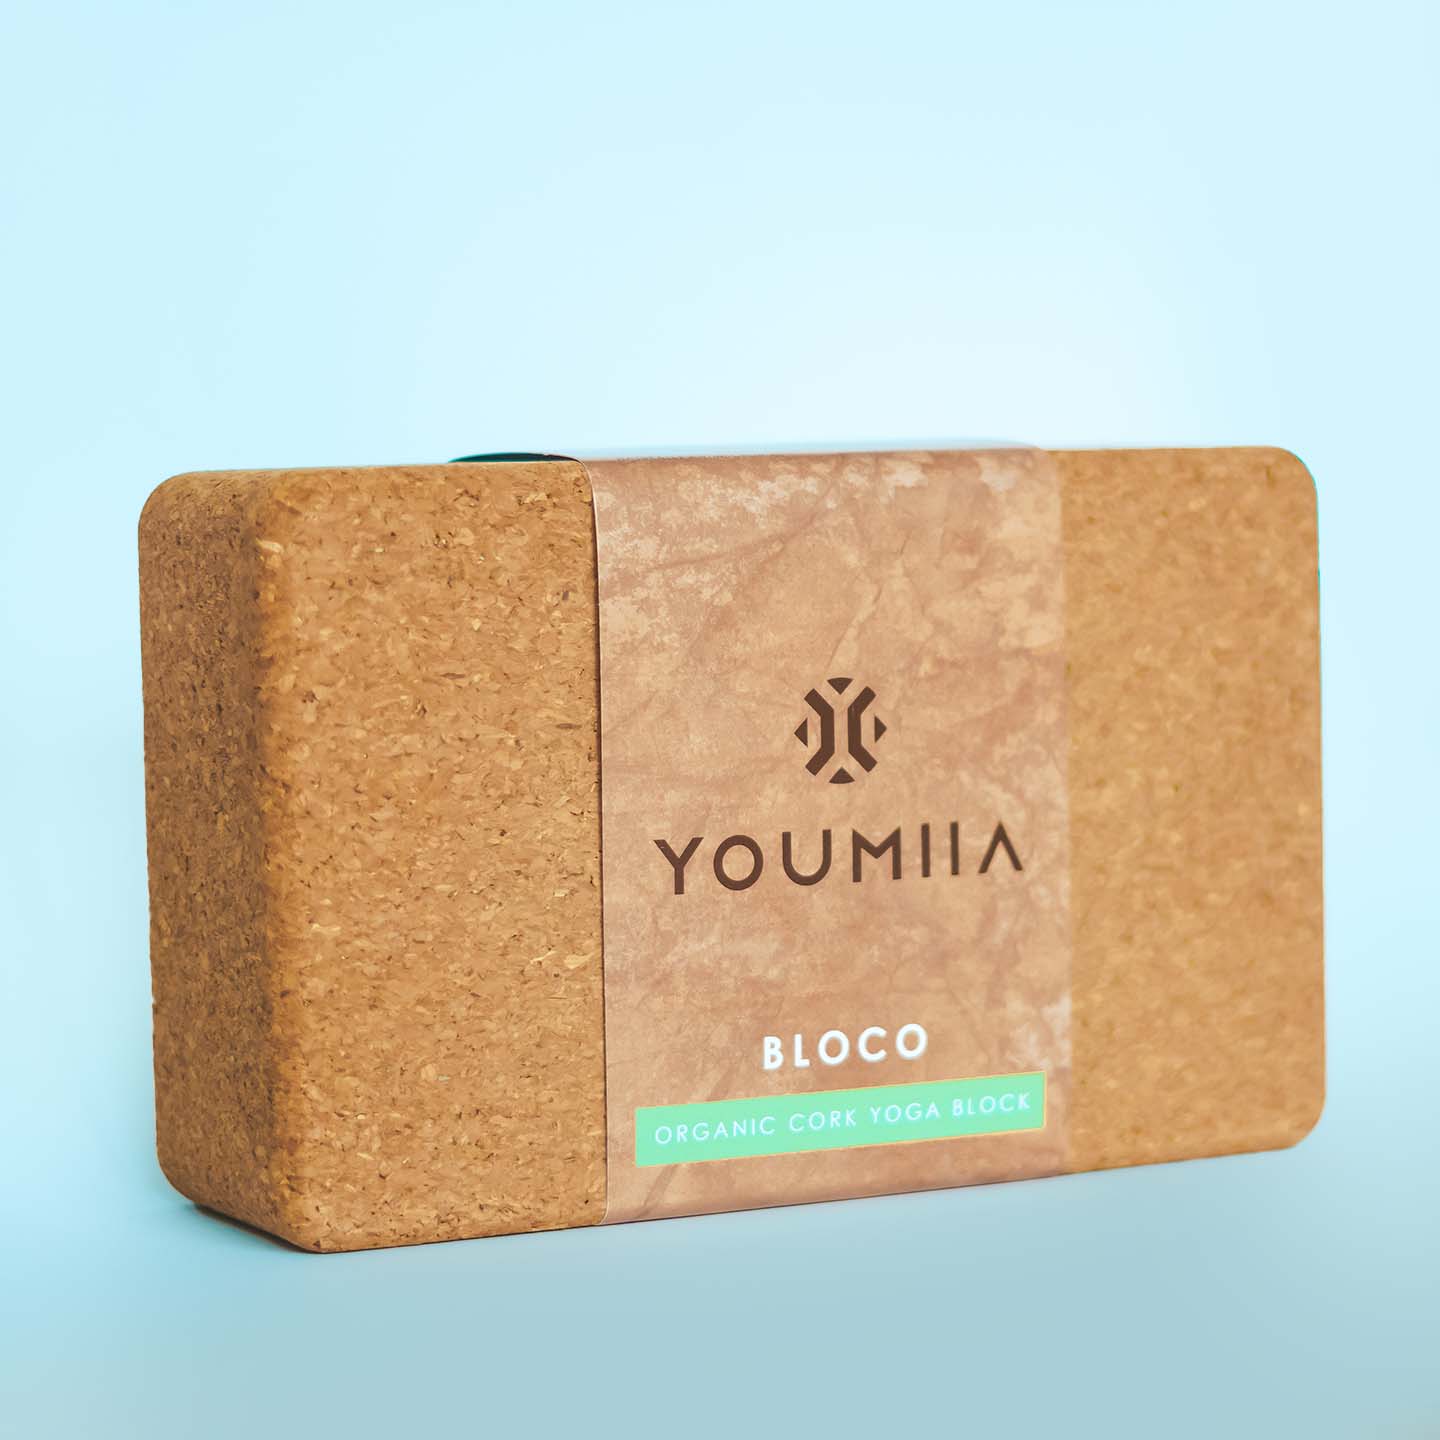 Bloco - Organic Cork Yoga Block